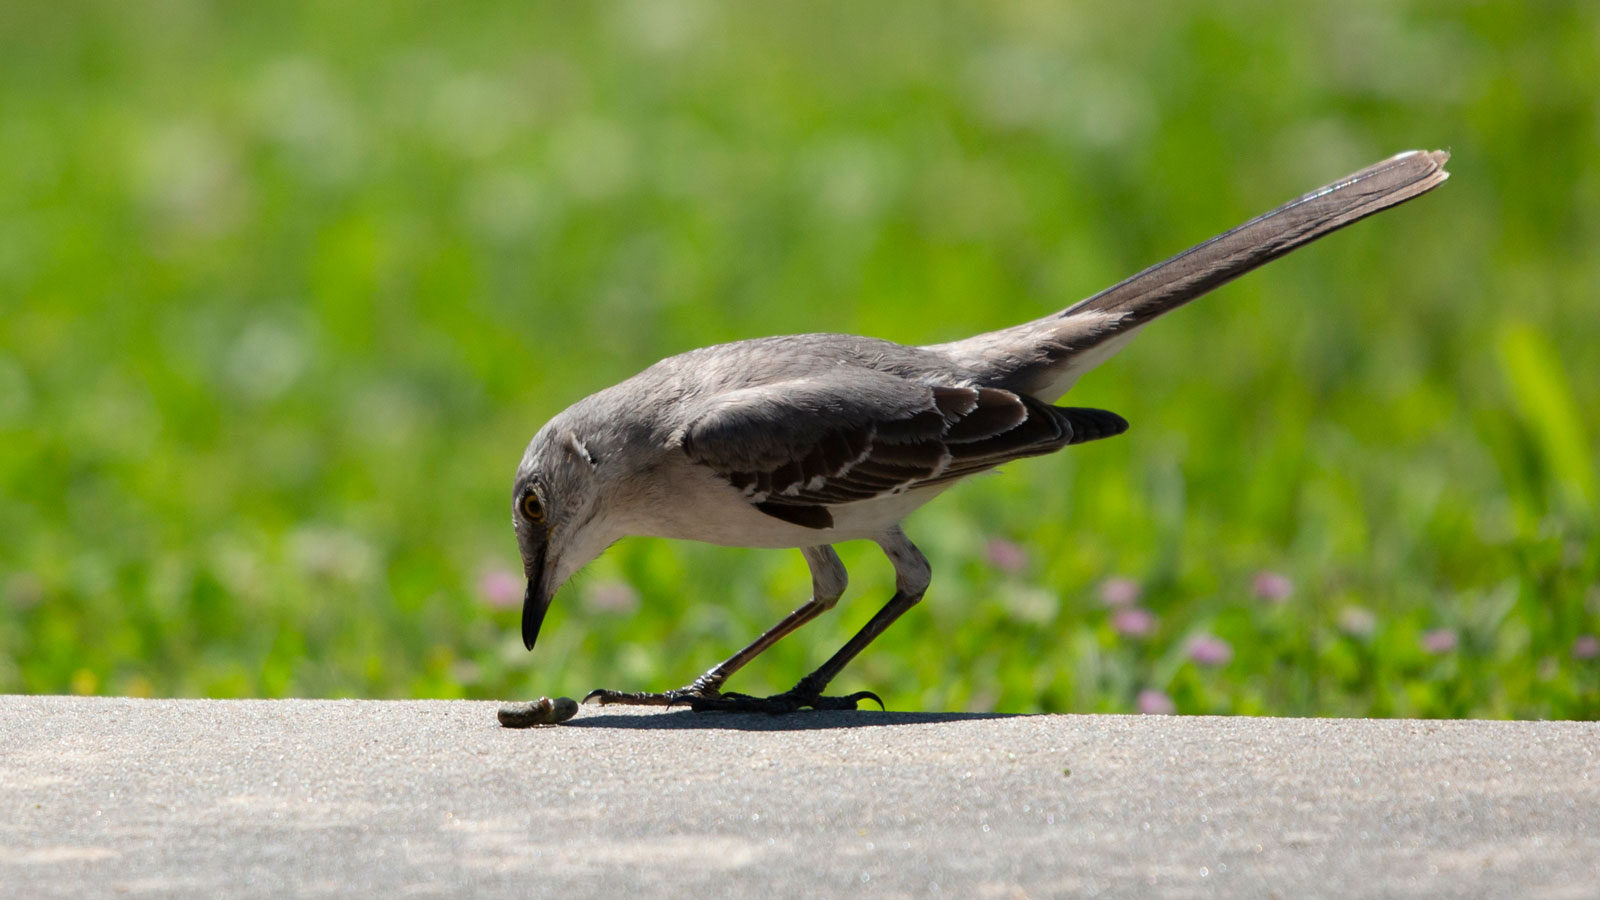 Northern mockingbird with a grub on a slab of cement